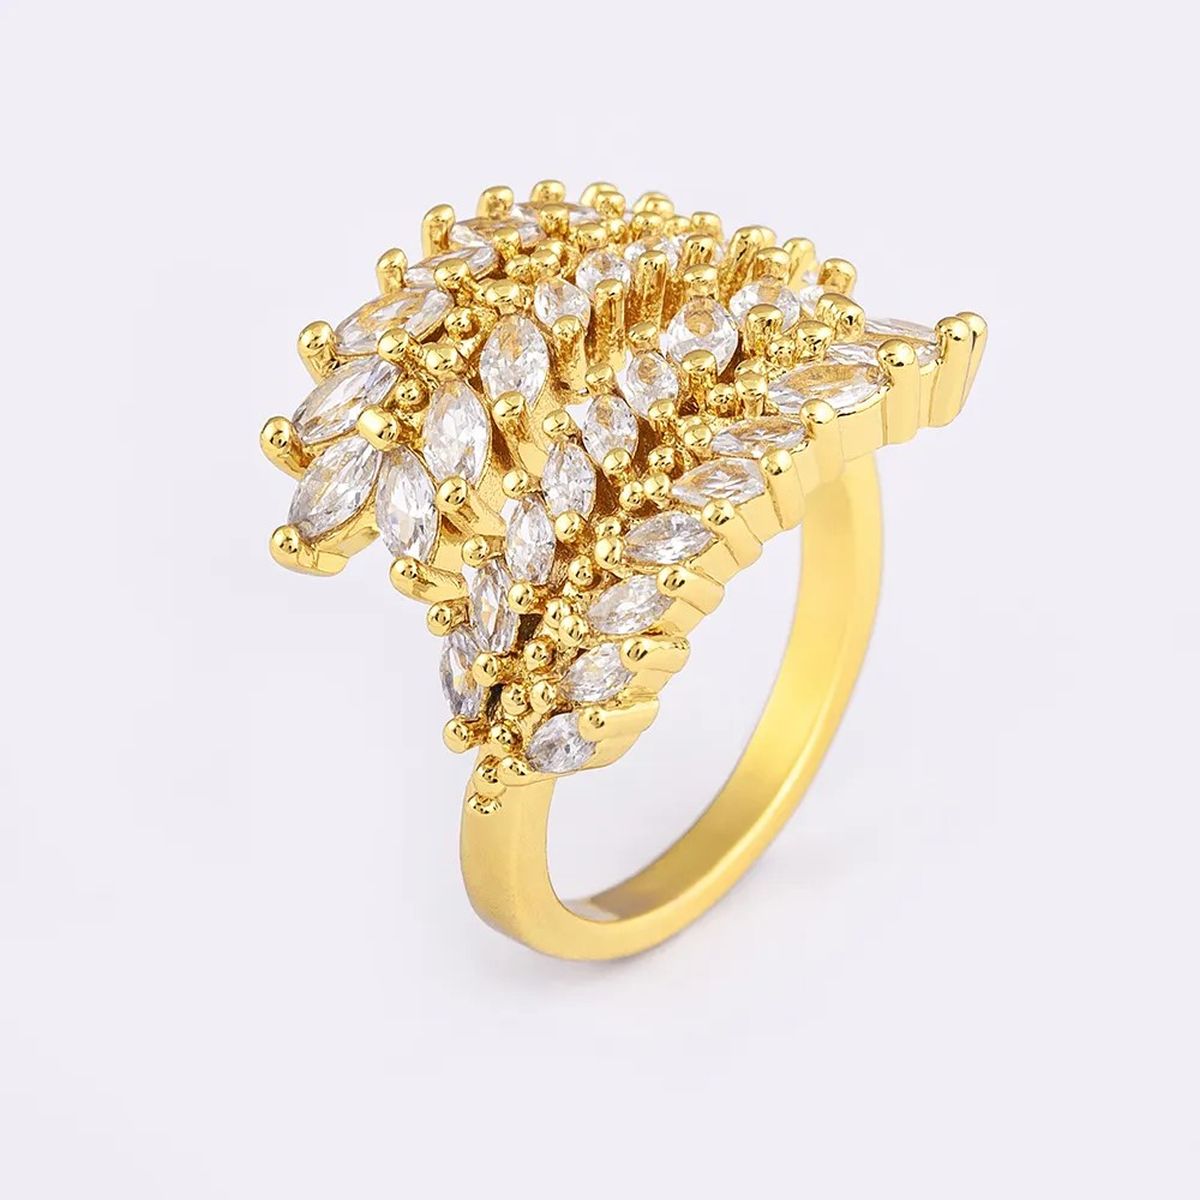 75% Traditional 8.5 Gram 18K Gold Ring at Rs 4500 in Vasai Virar | ID:  2852141176373